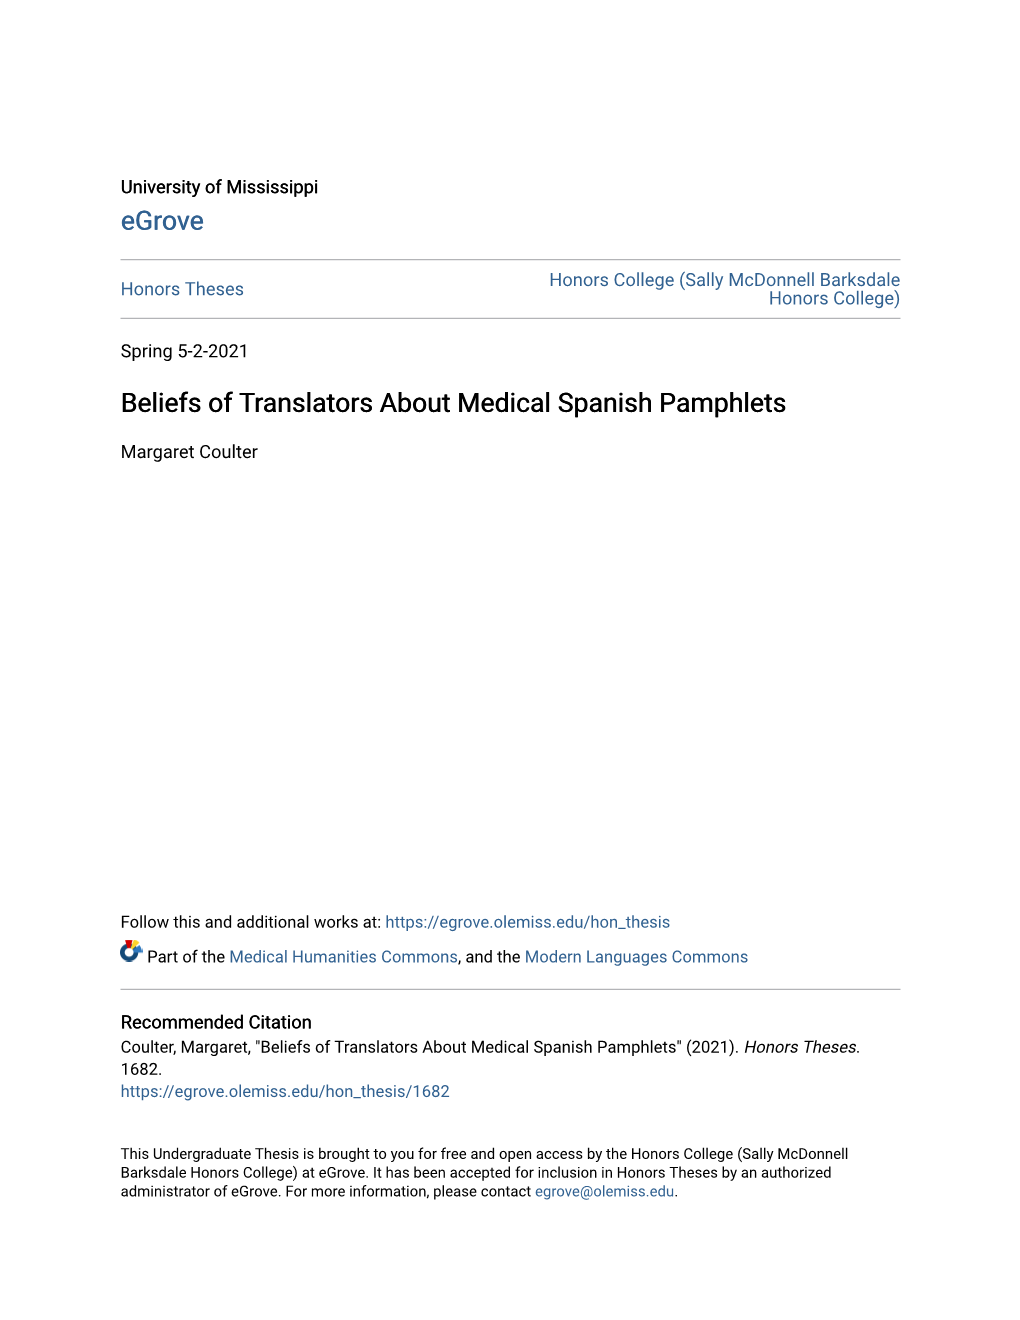 Beliefs of Translators About Medical Spanish Pamphlets